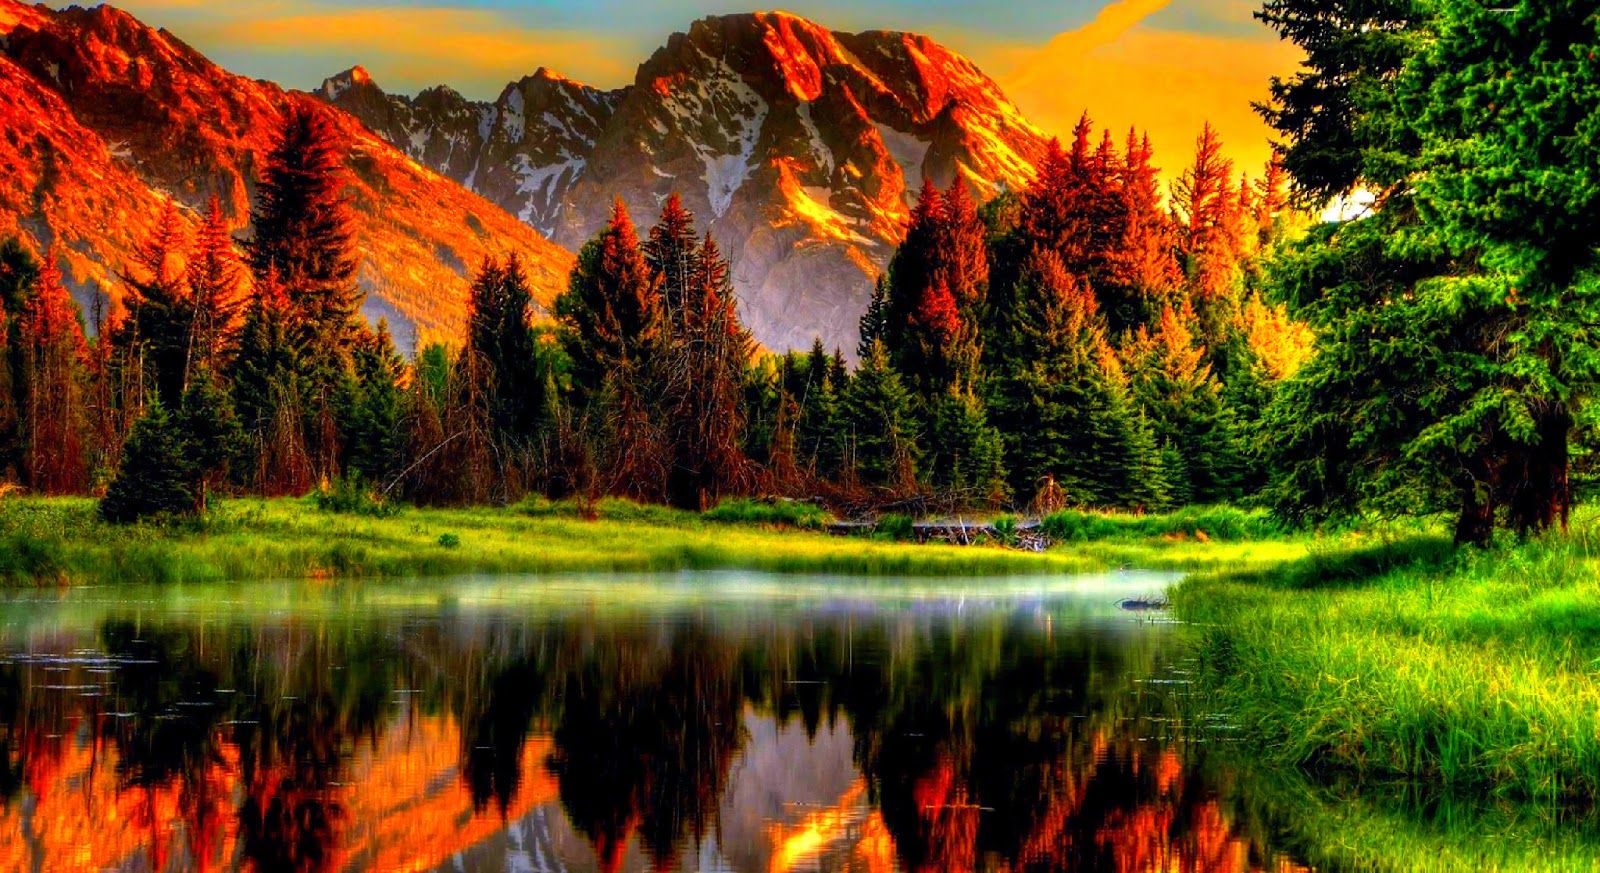 Download beautiful scenery wallpaper. Scenery picture, Beautiful scenery wallpaper, Beautiful scenery picture